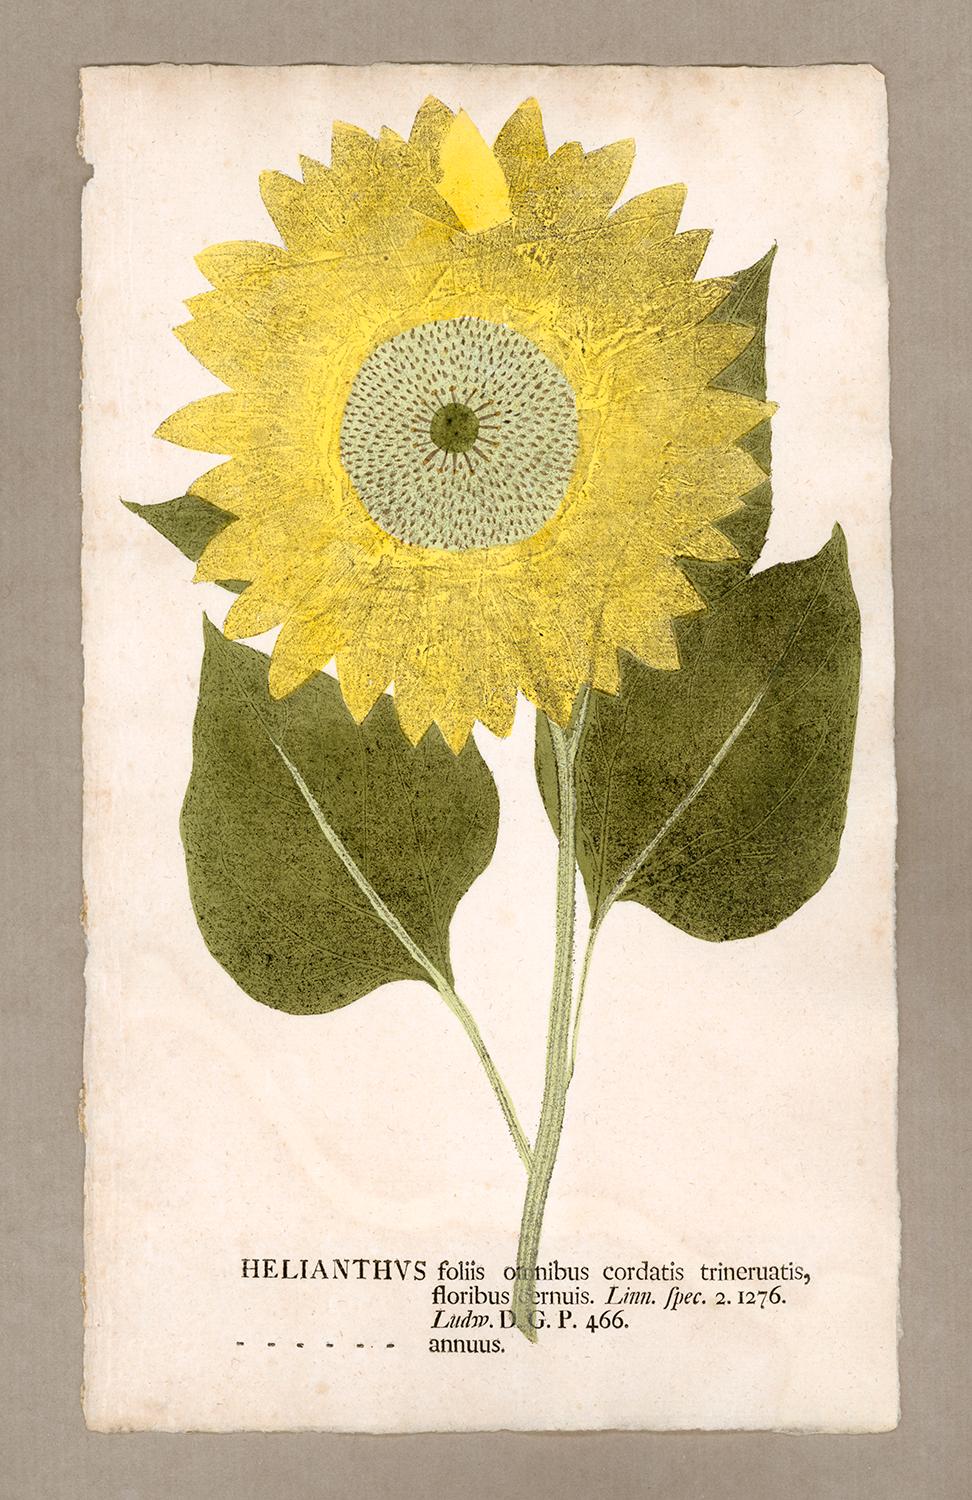 Johann Hieronymus Kniphof  Figurative Print - Botanica in Originali, seu Herbarium Vivum - "Nature Printed Plants" -6